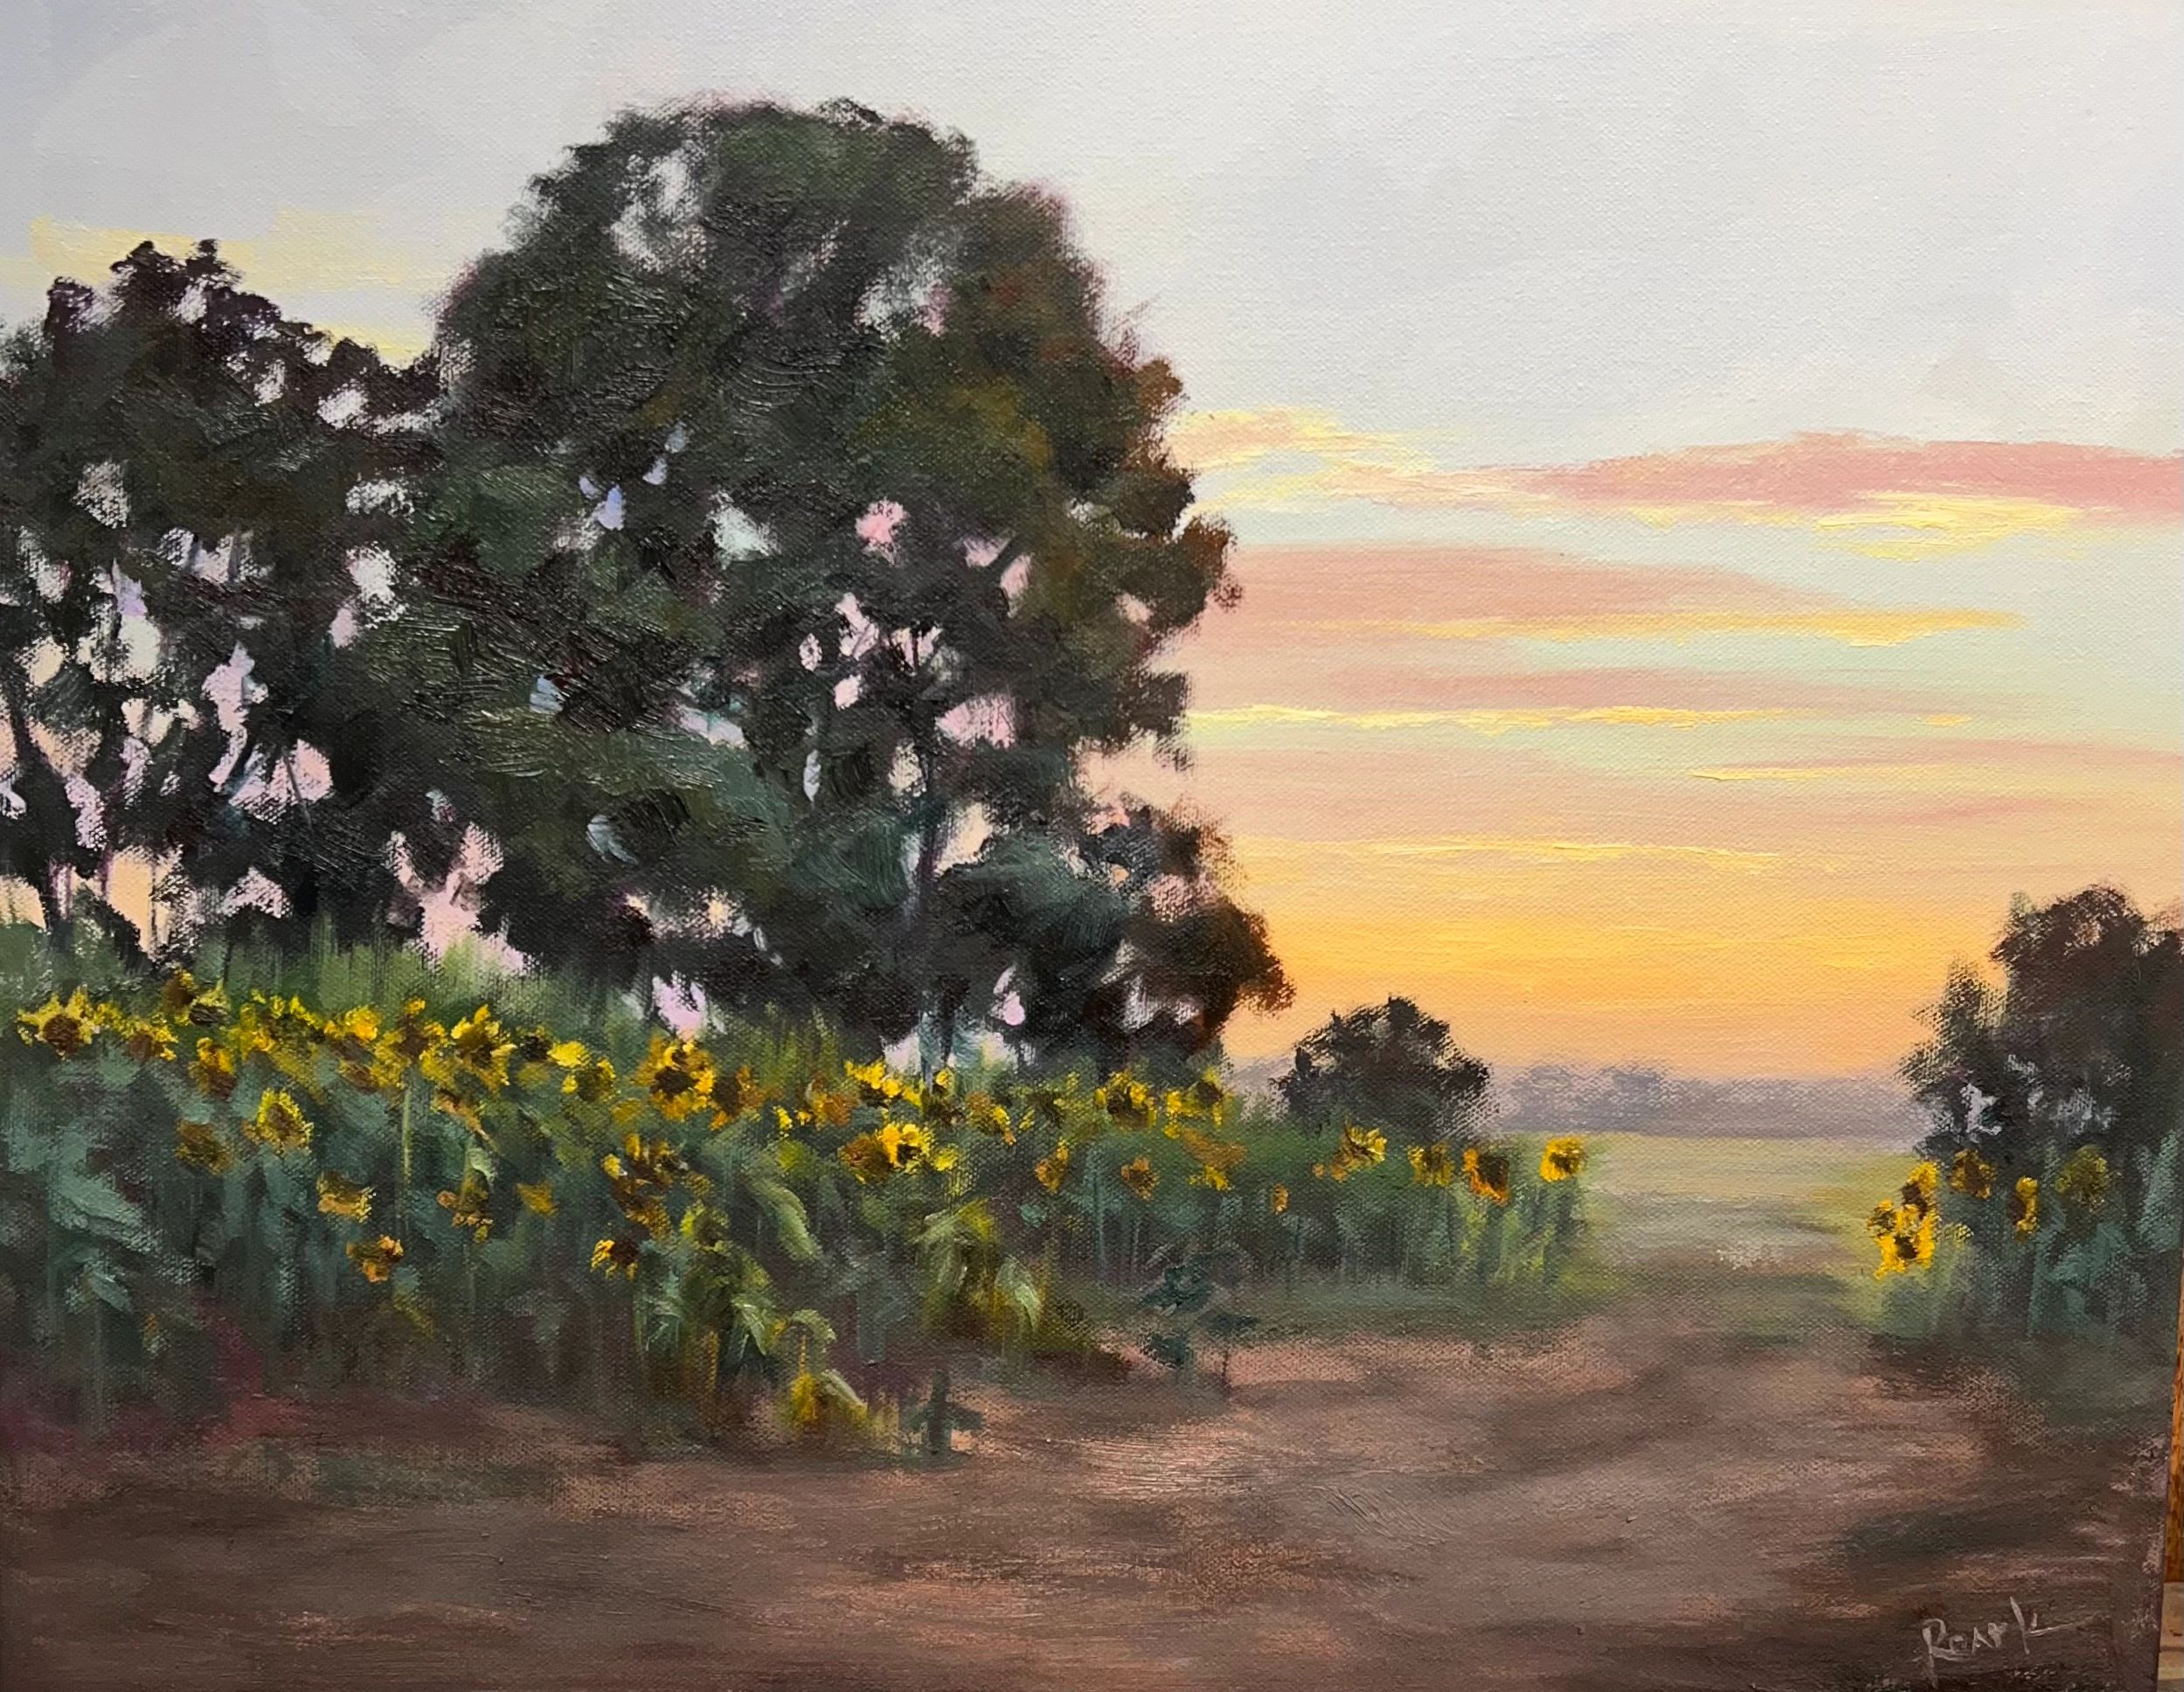 Late Mississippi delta sun backlights sunflowers by Southern Landscape painter Carol Roark